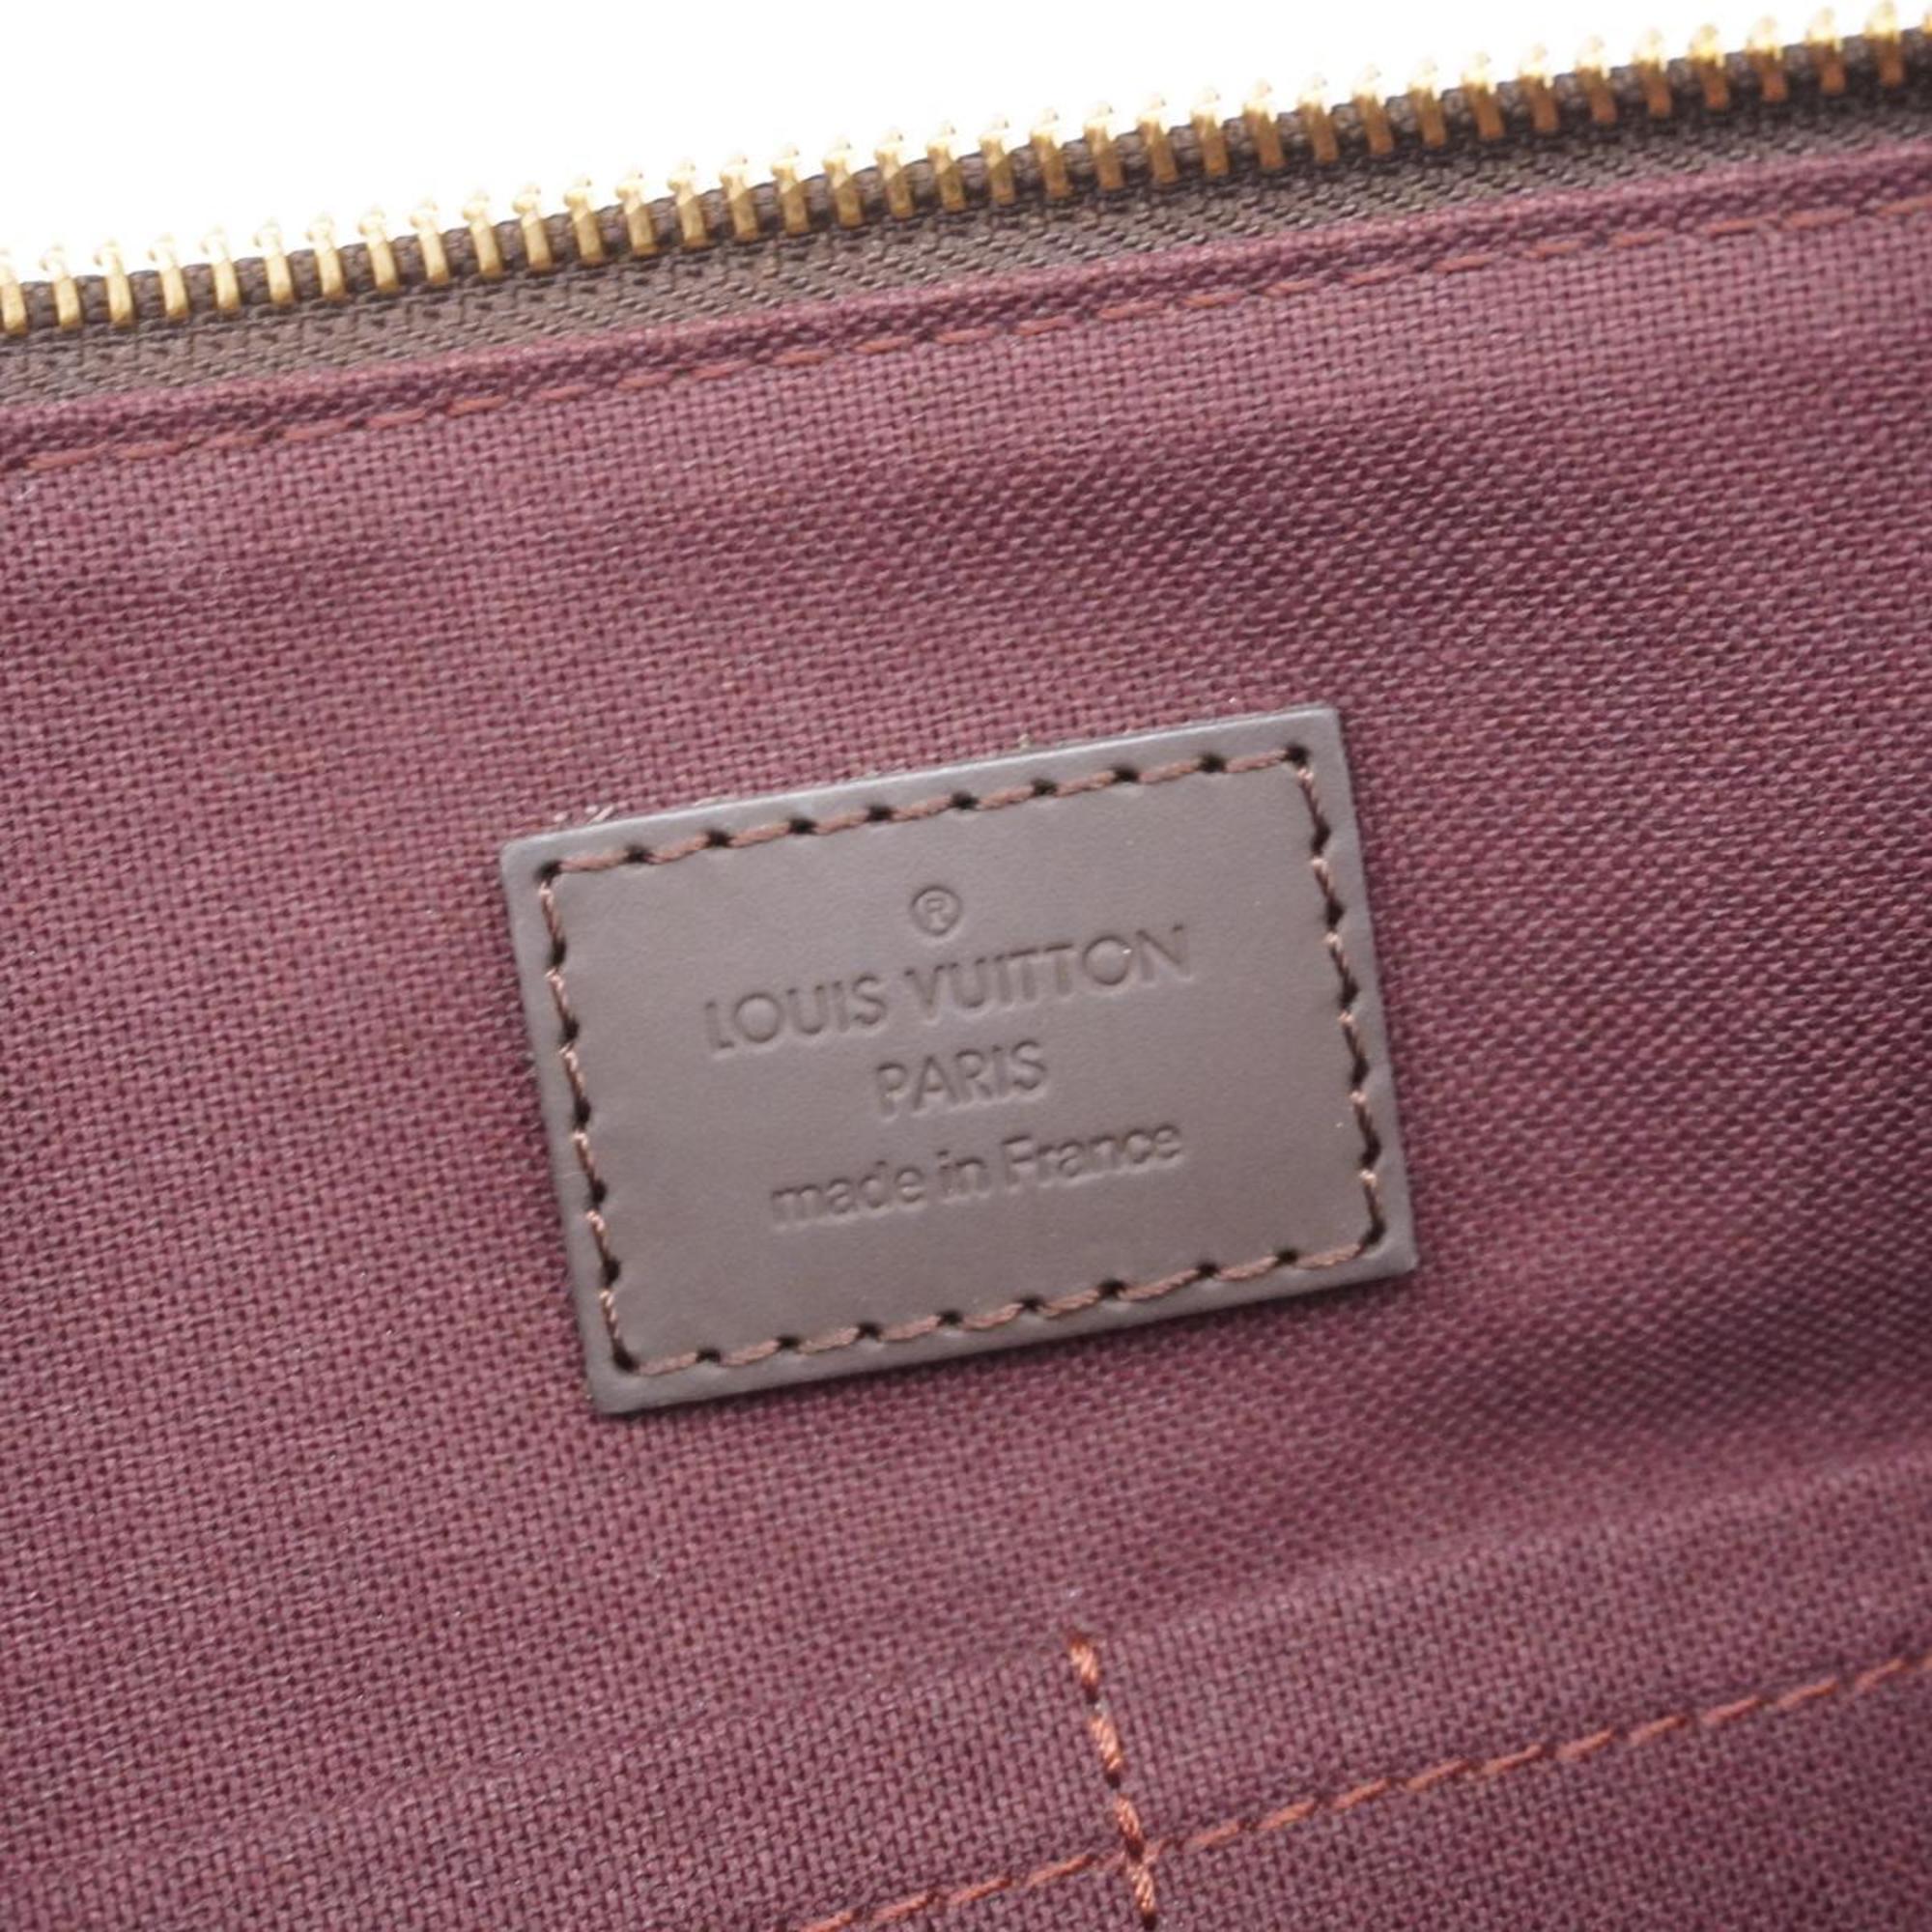 Louis Vuitton Tote Bag Damier Iena PM N41012 Ebene Ladies